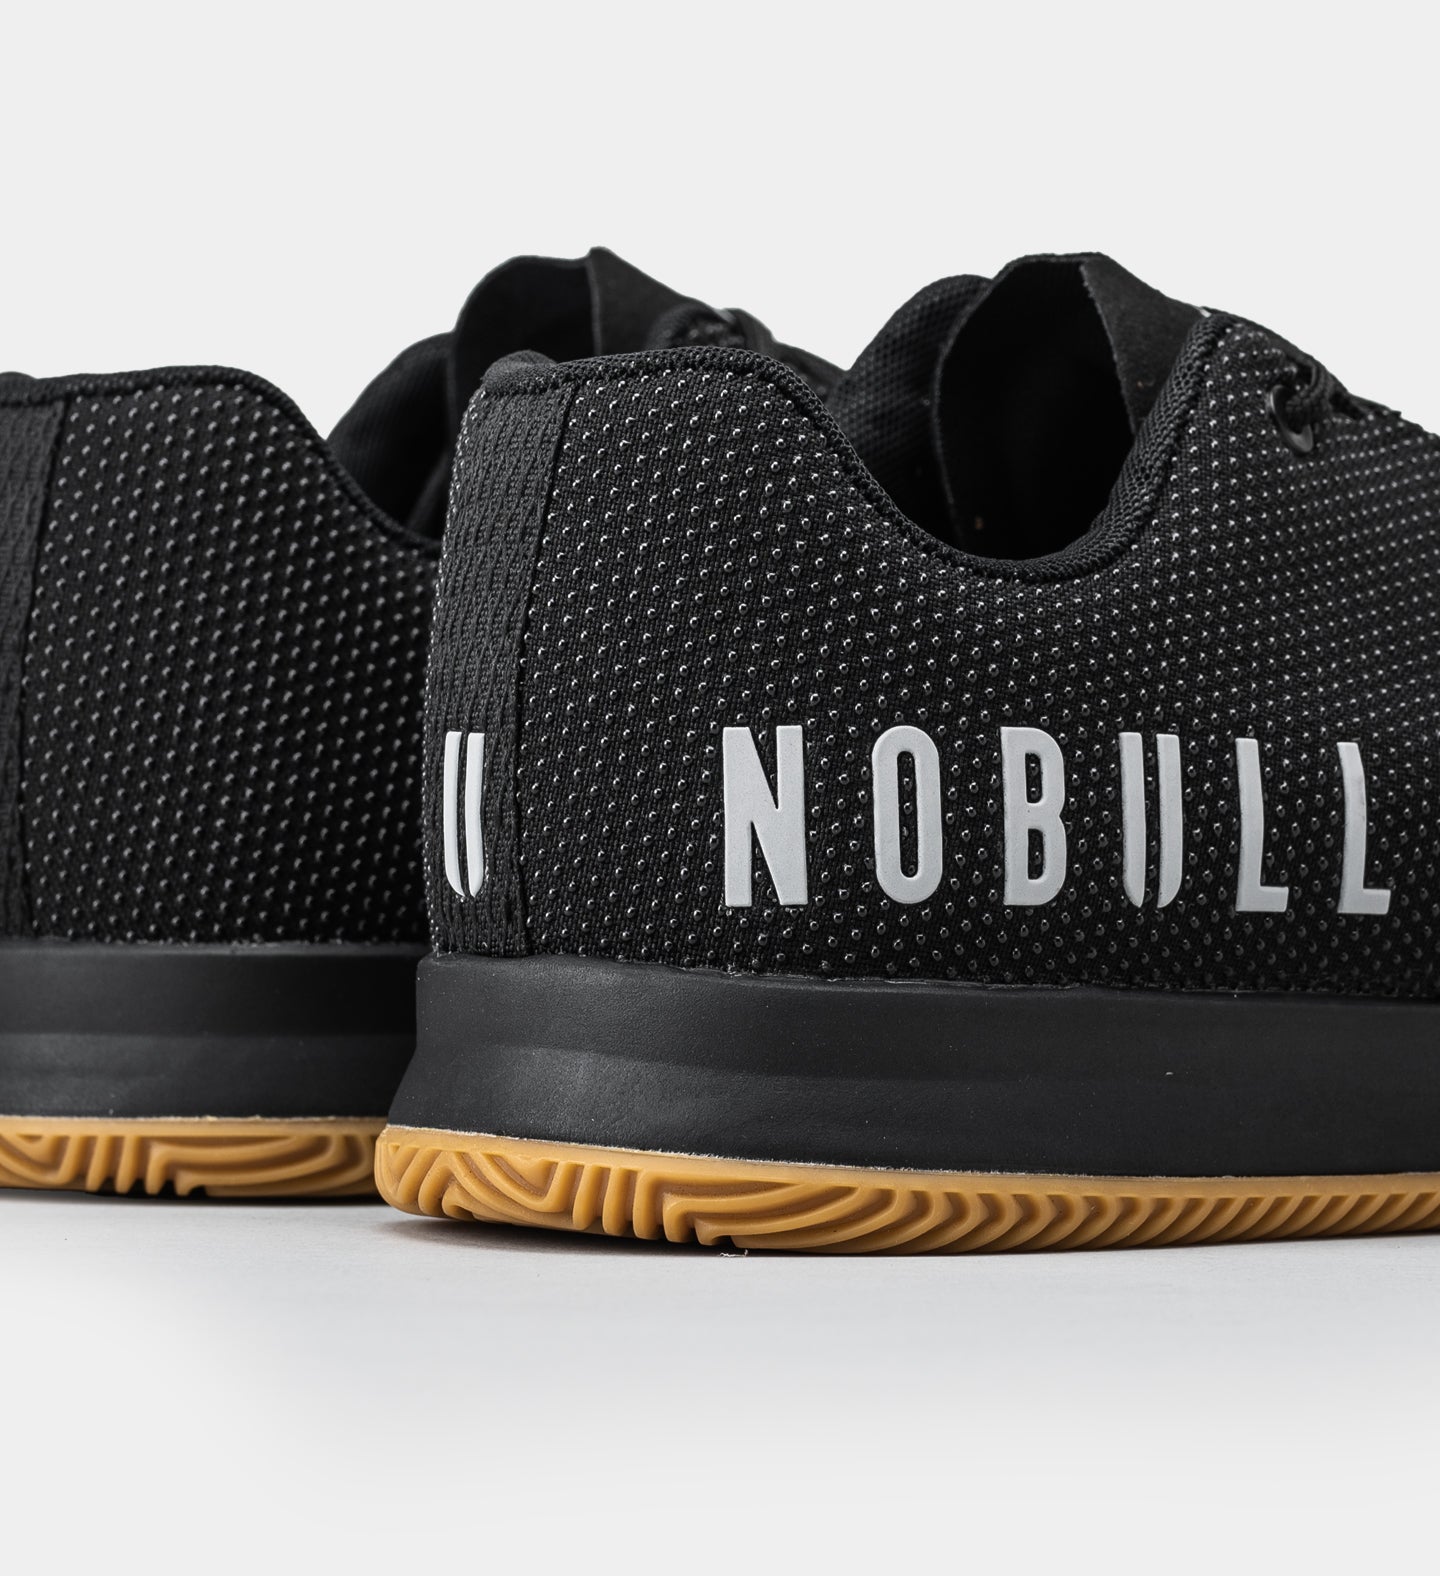 MEN'S BLACK GUM NOBULL IMPACT, Men's Black Training Shoes